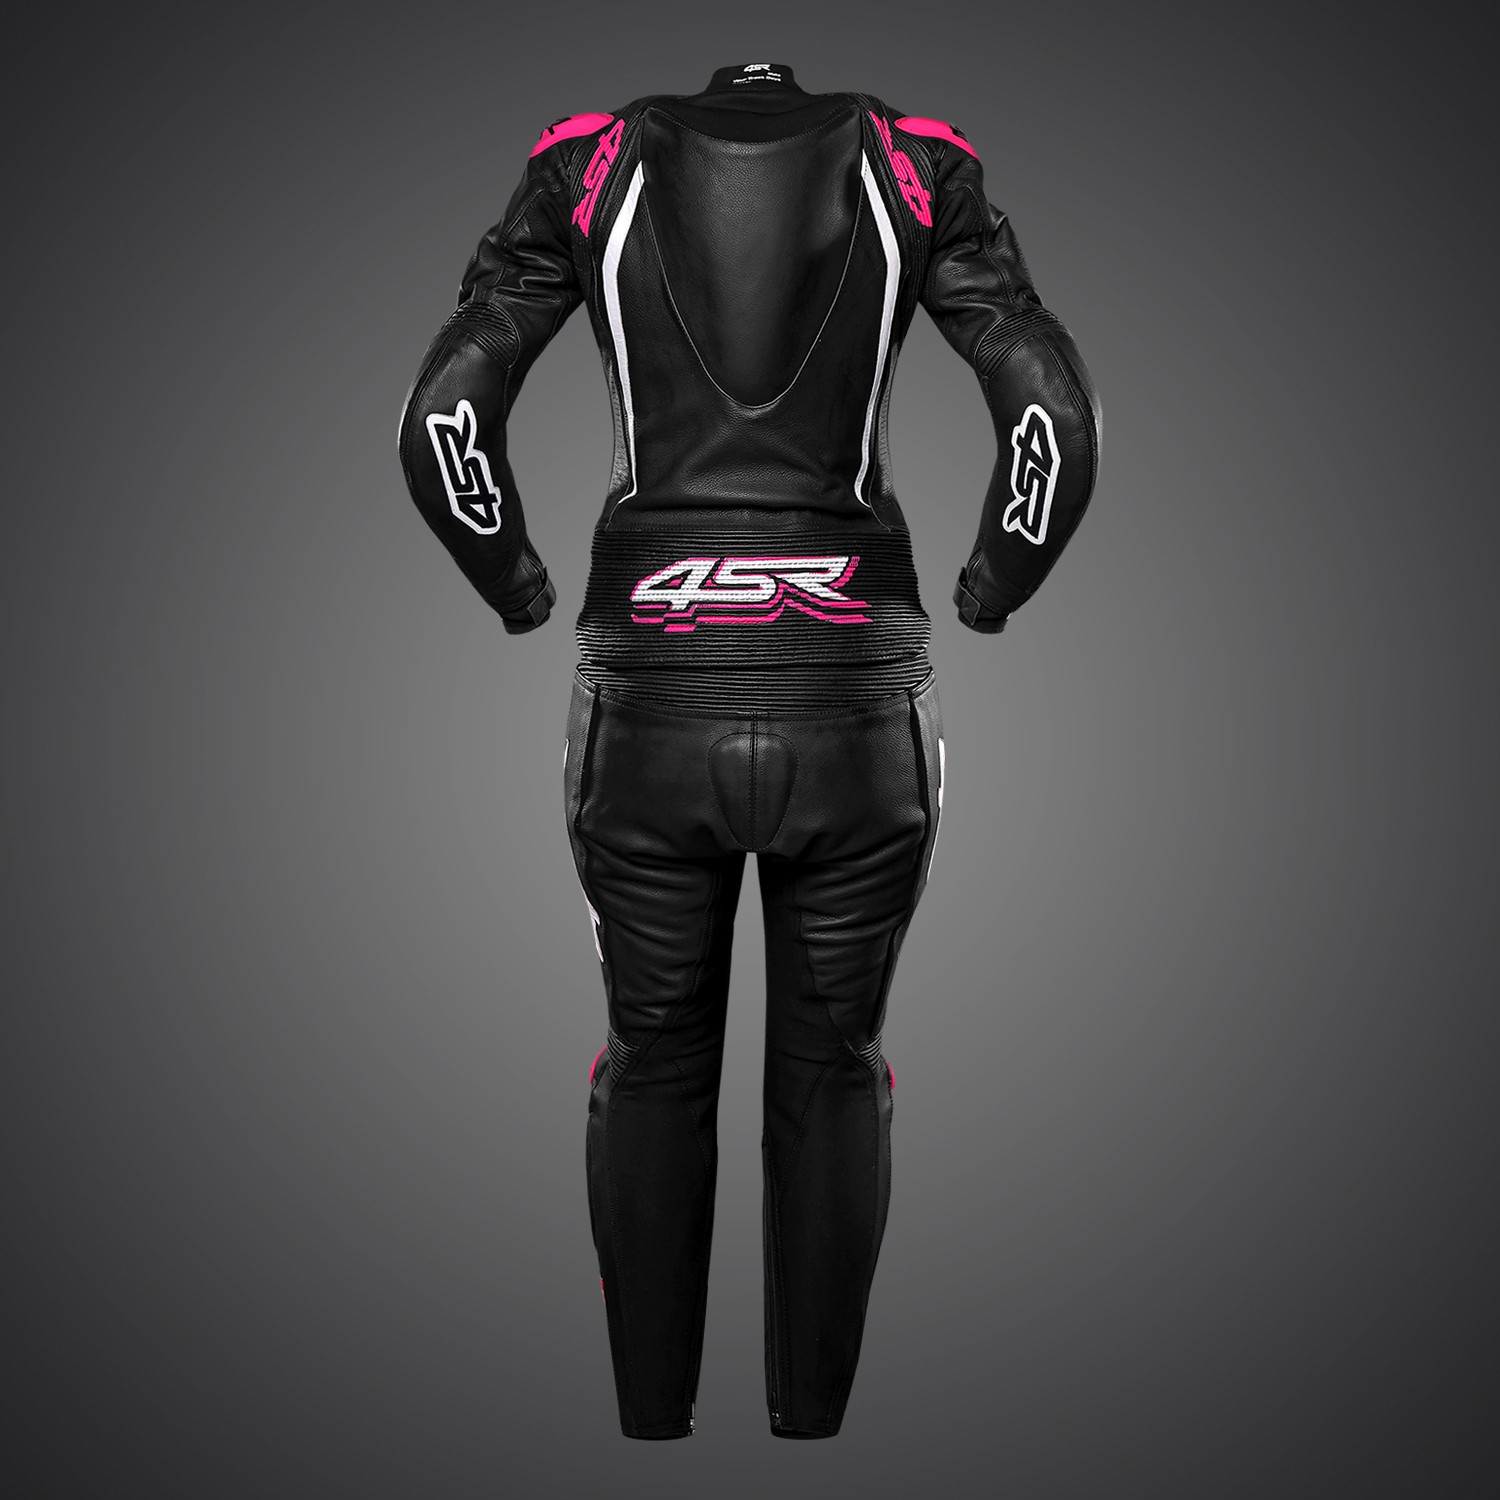 4SR Damen Motorrad Lederkombi Racing Lady Pink 2-Teiler